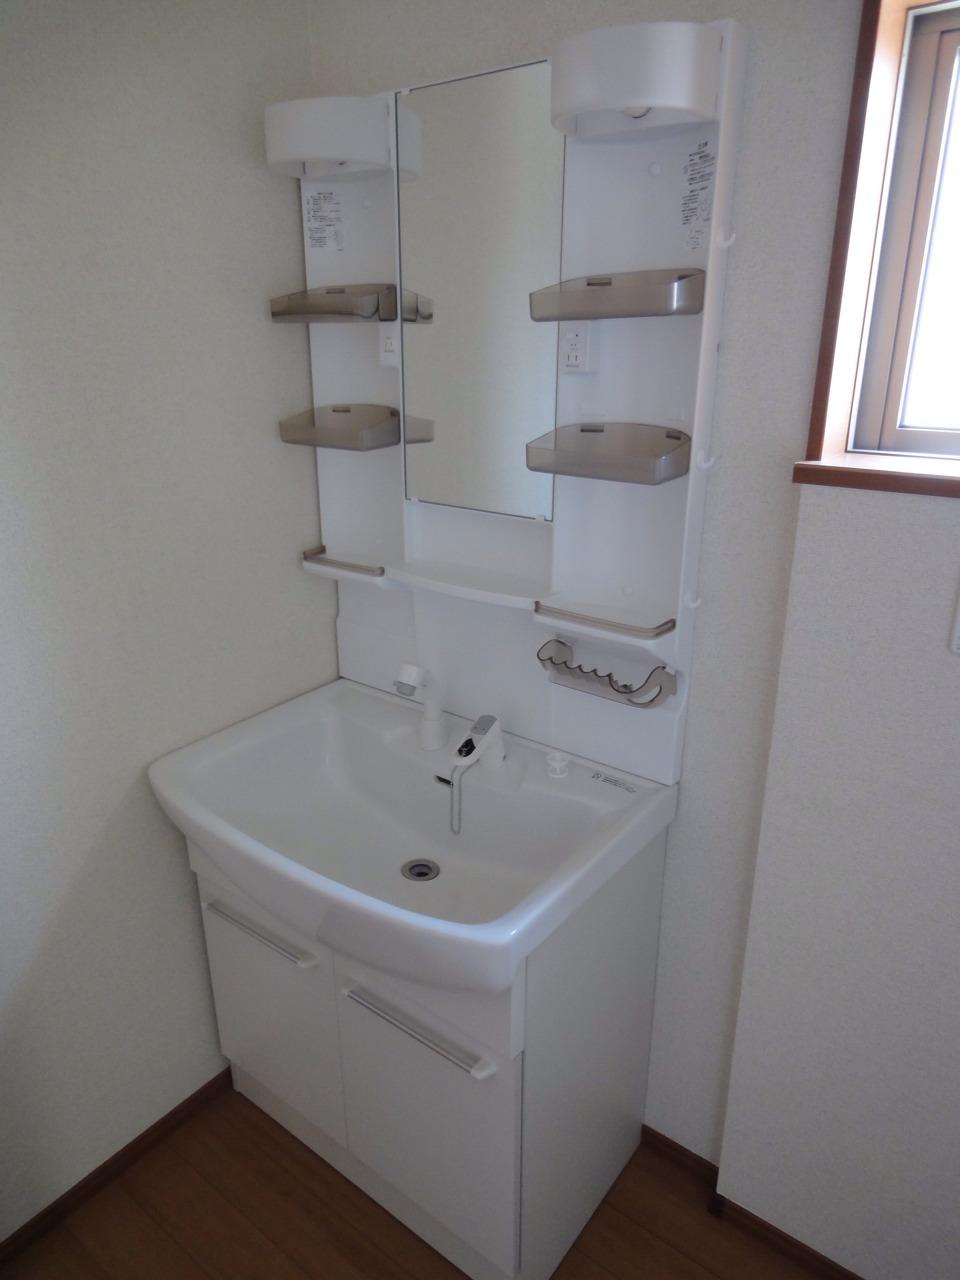 Wash basin, toilet. 8 Building (2013.11.14 shooting)